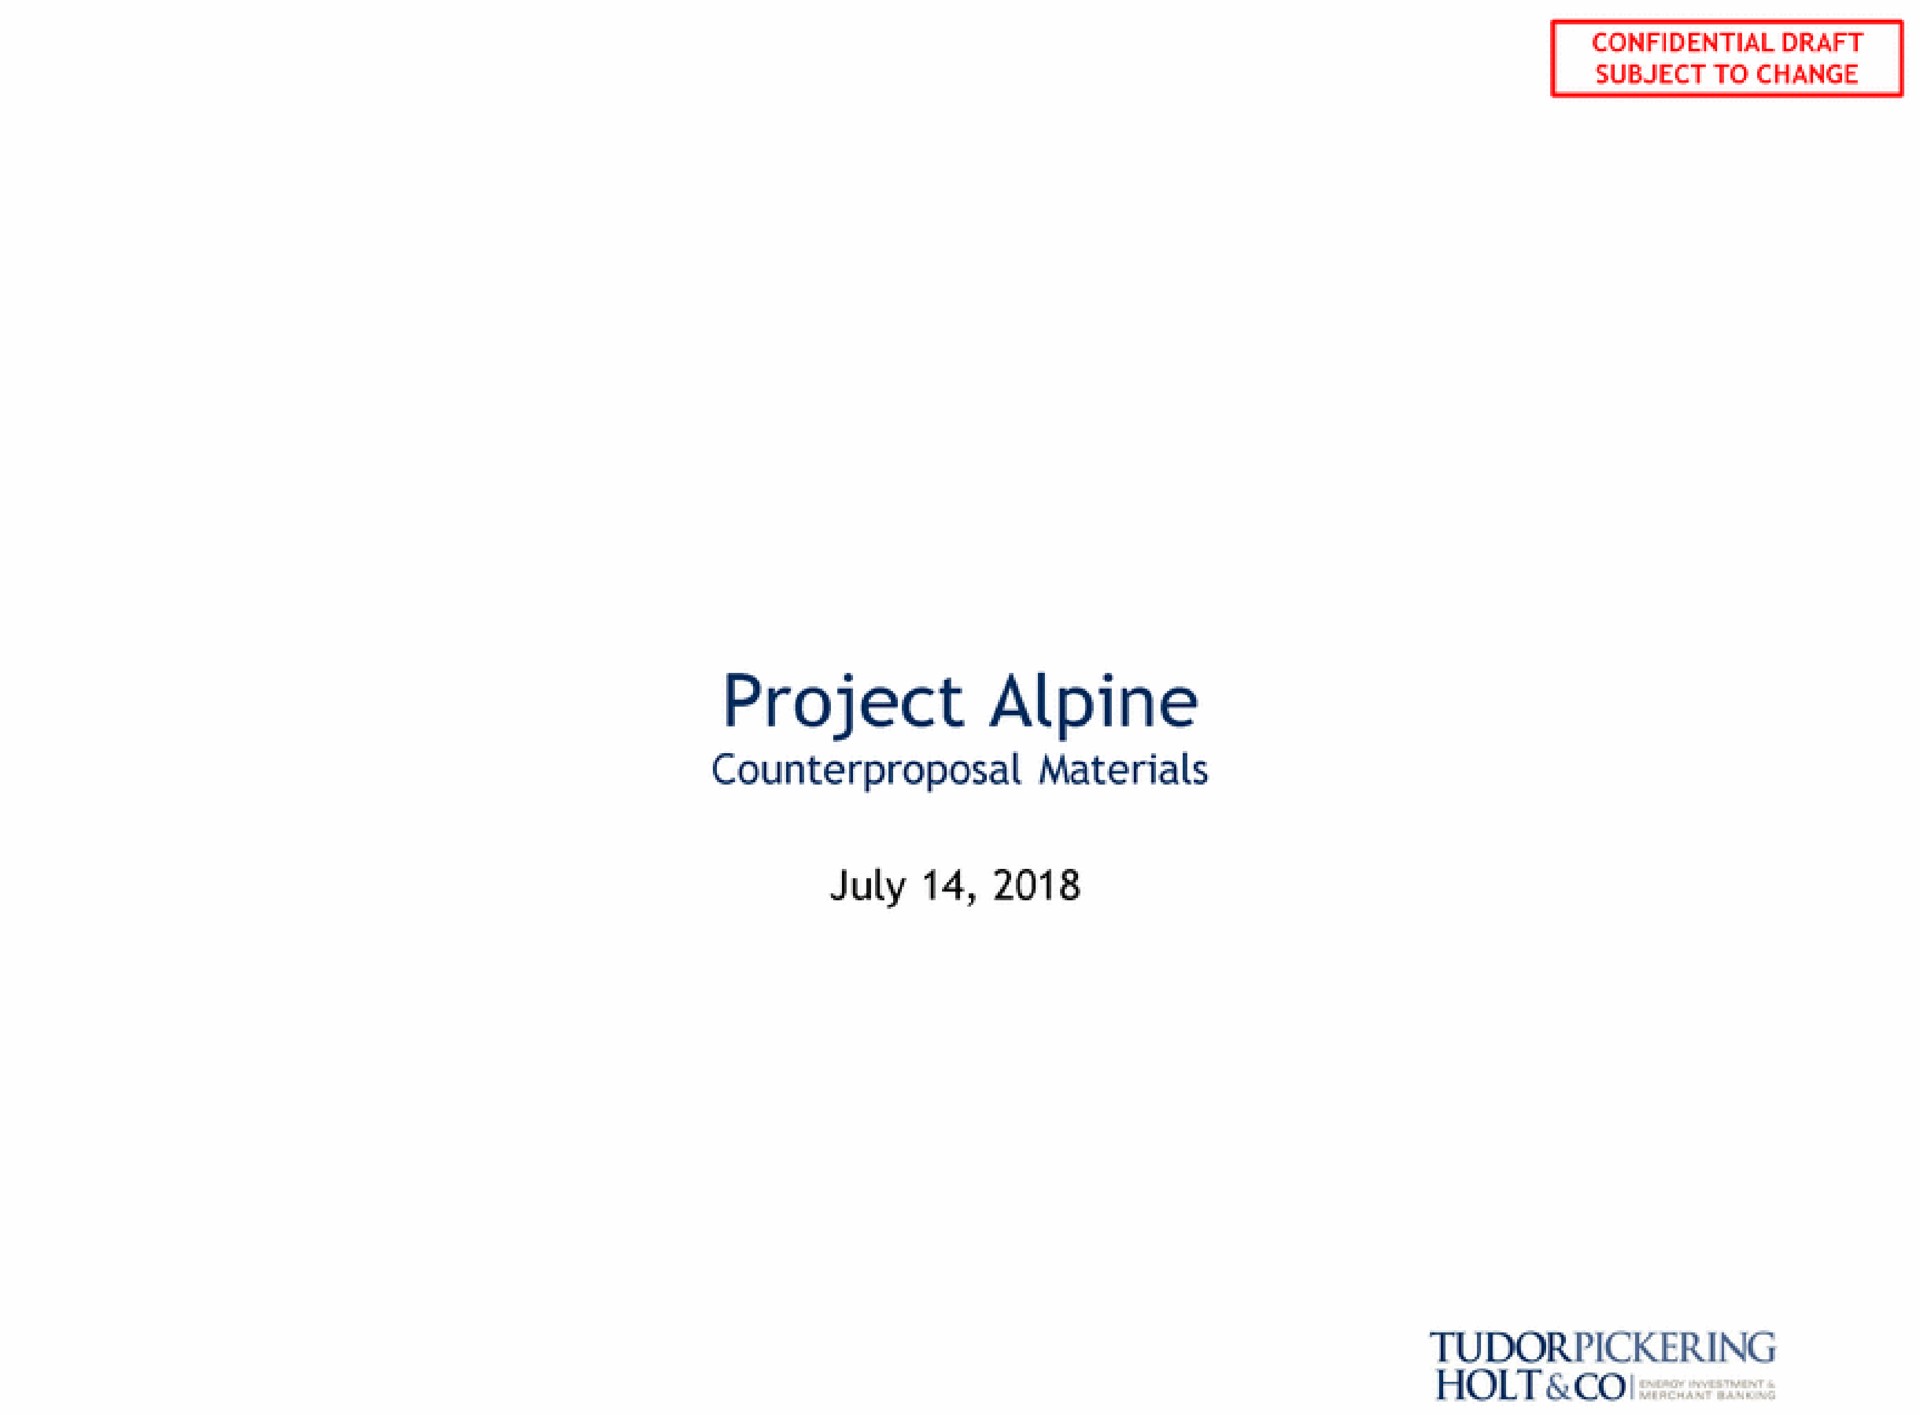 project alpine counterproposal materials | Tudor, Pickering, Holt & Co